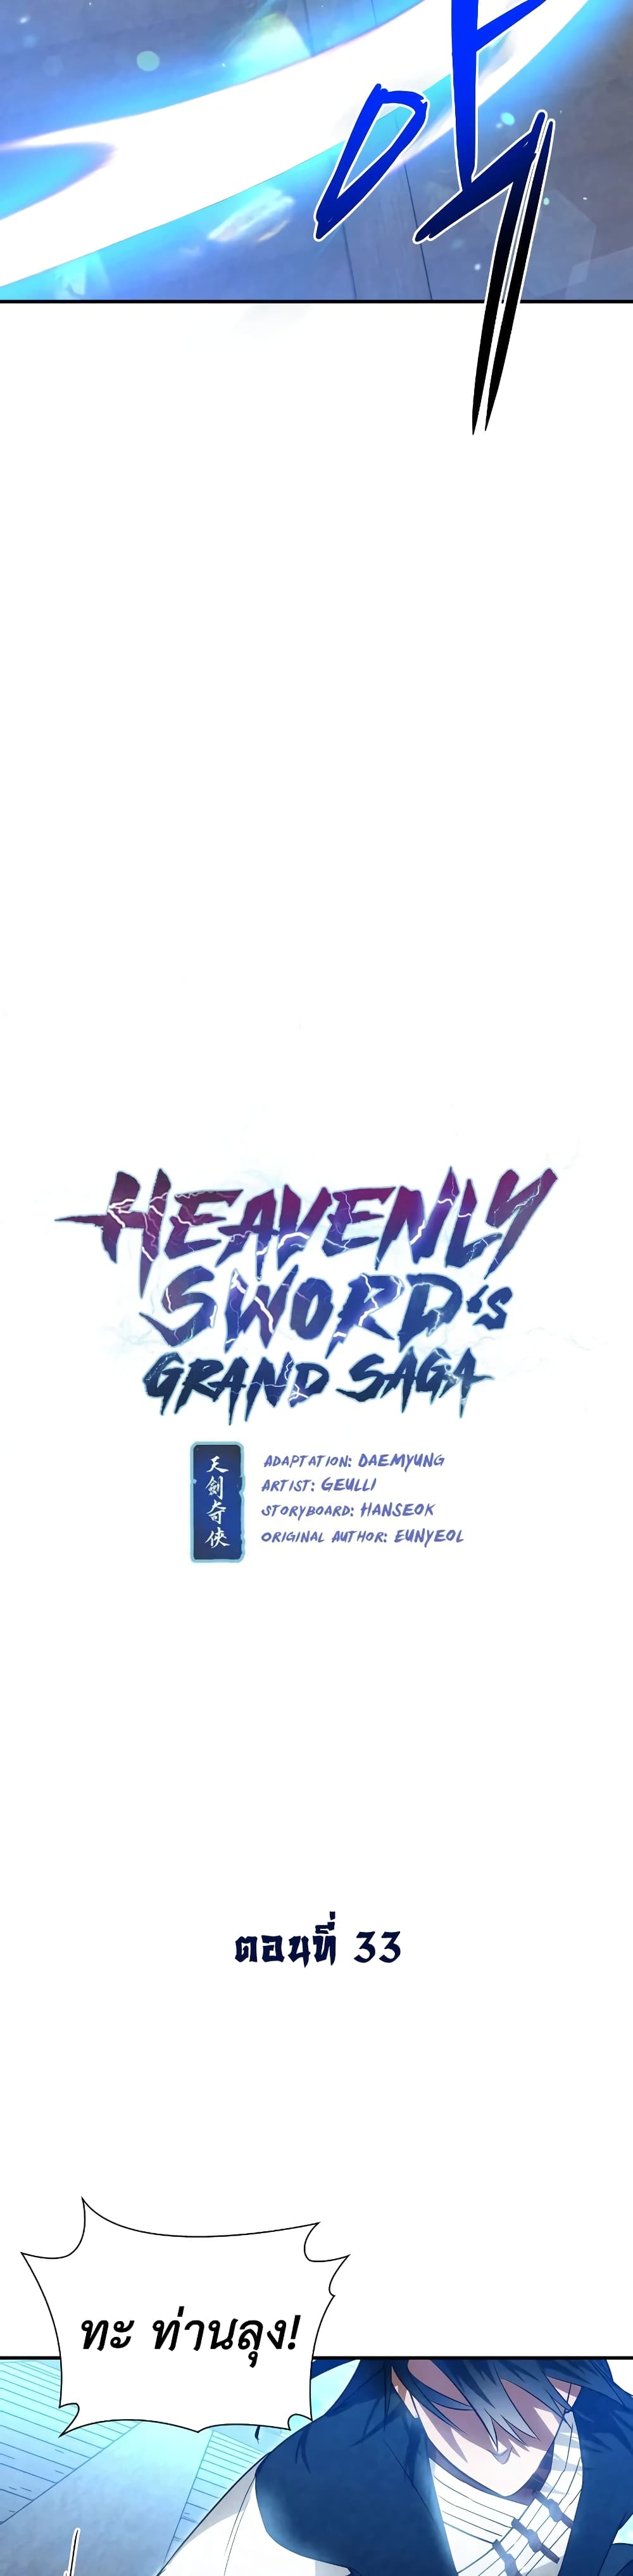 Heavenly Sword’s Grand Saga 33 (4)